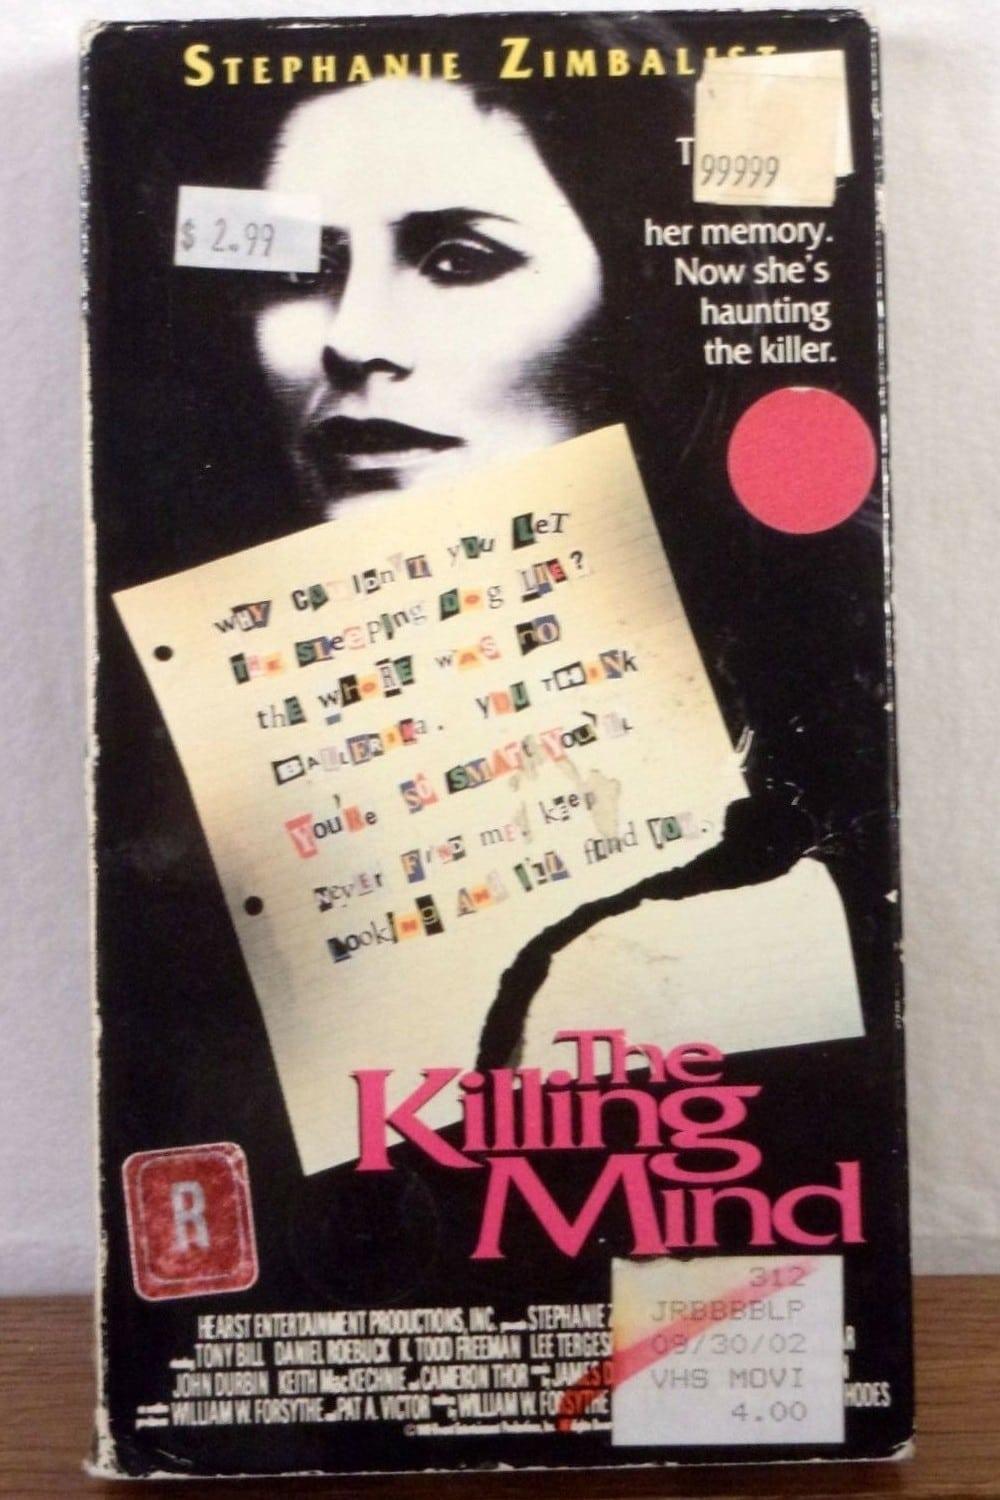 The Killing Mind poster